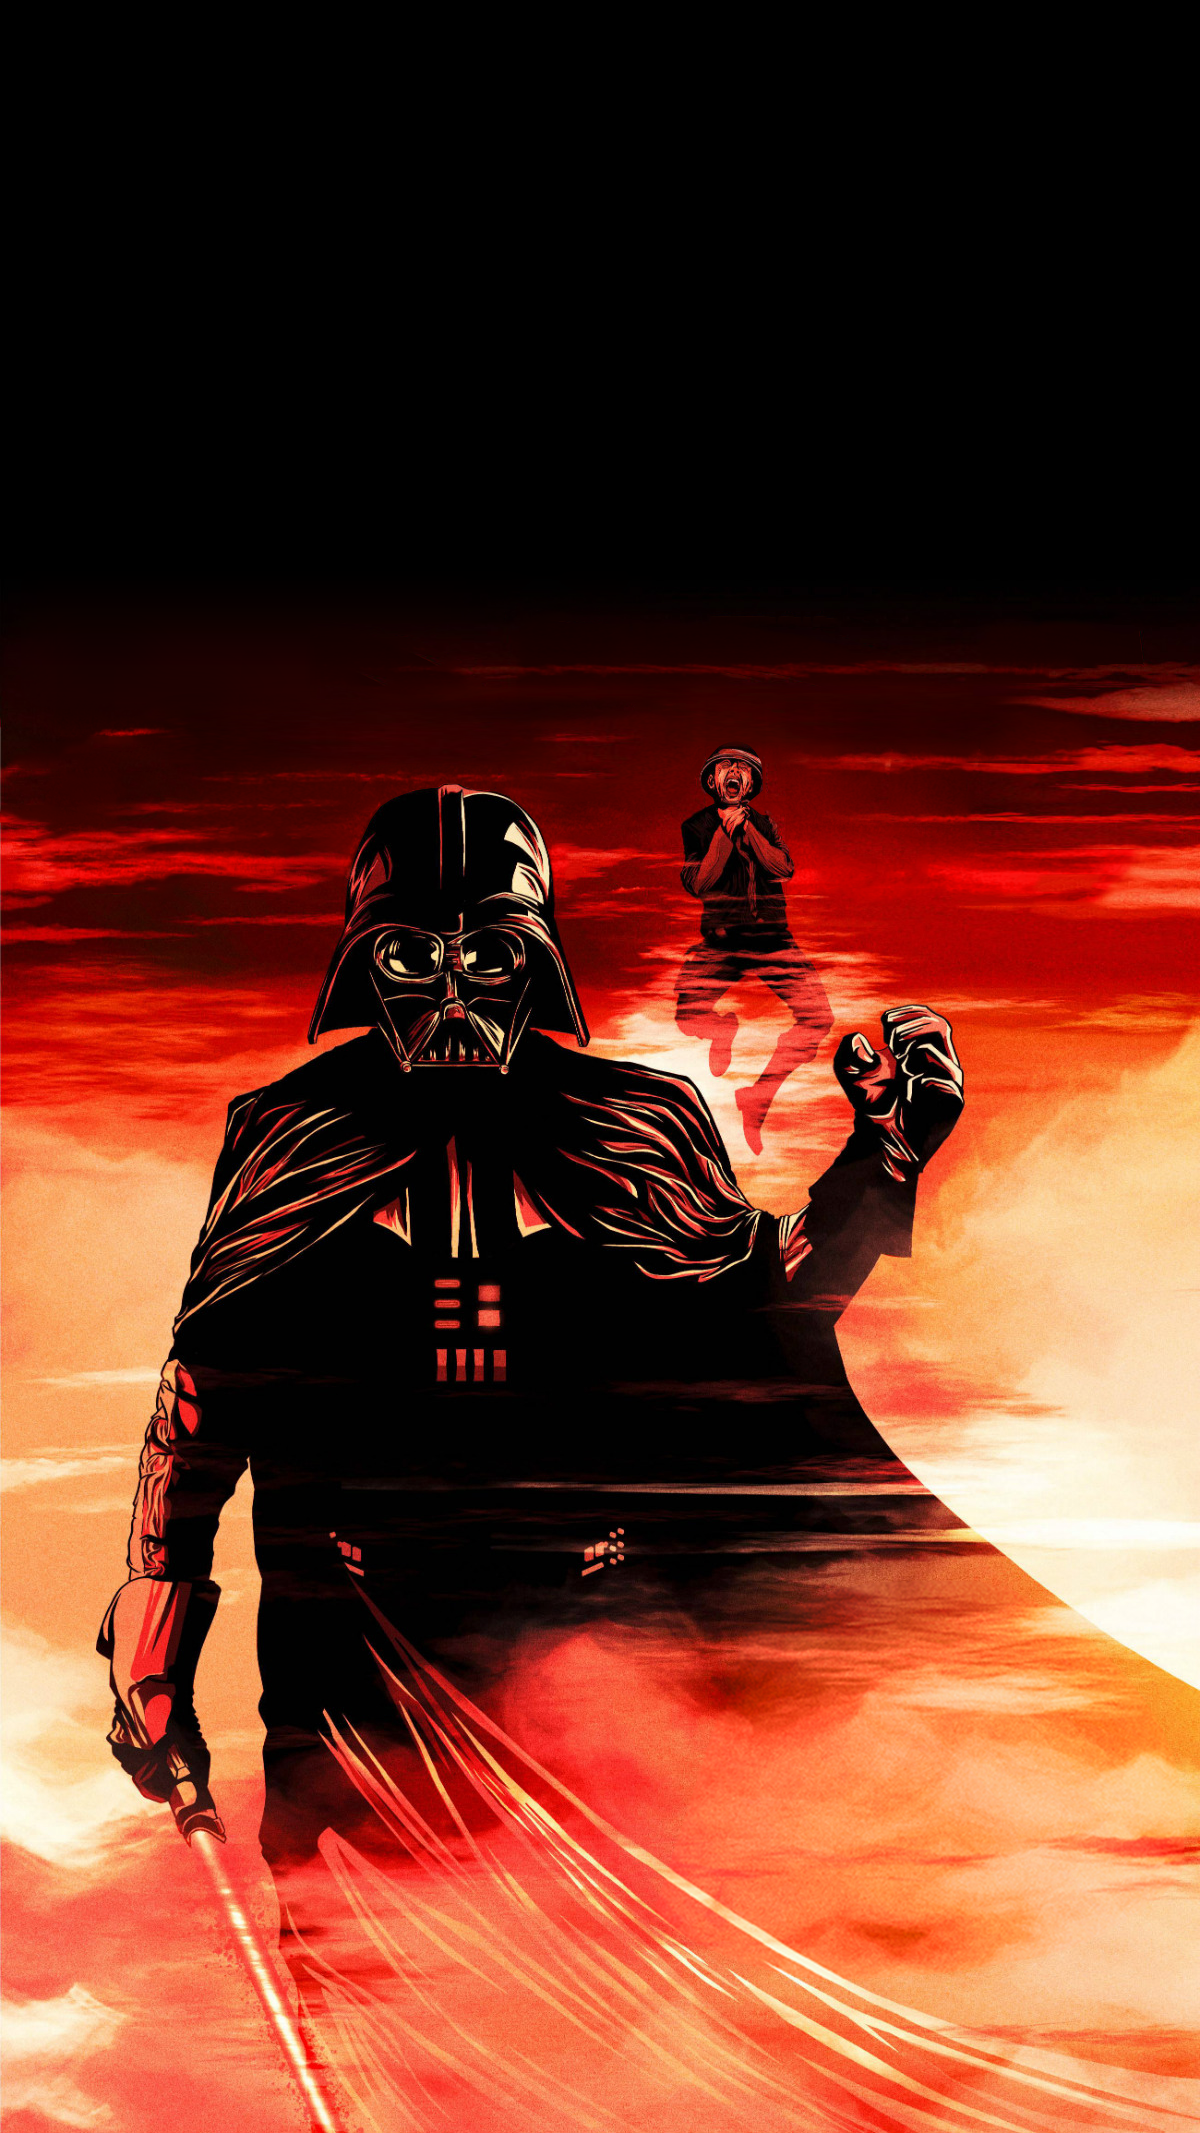 Backgrond Darth Vader Wallpaper Discover more Character Darth Vader  Fictional Hero Original wa  Darth vader wallpaper Star wars darth vader  Star wars poster